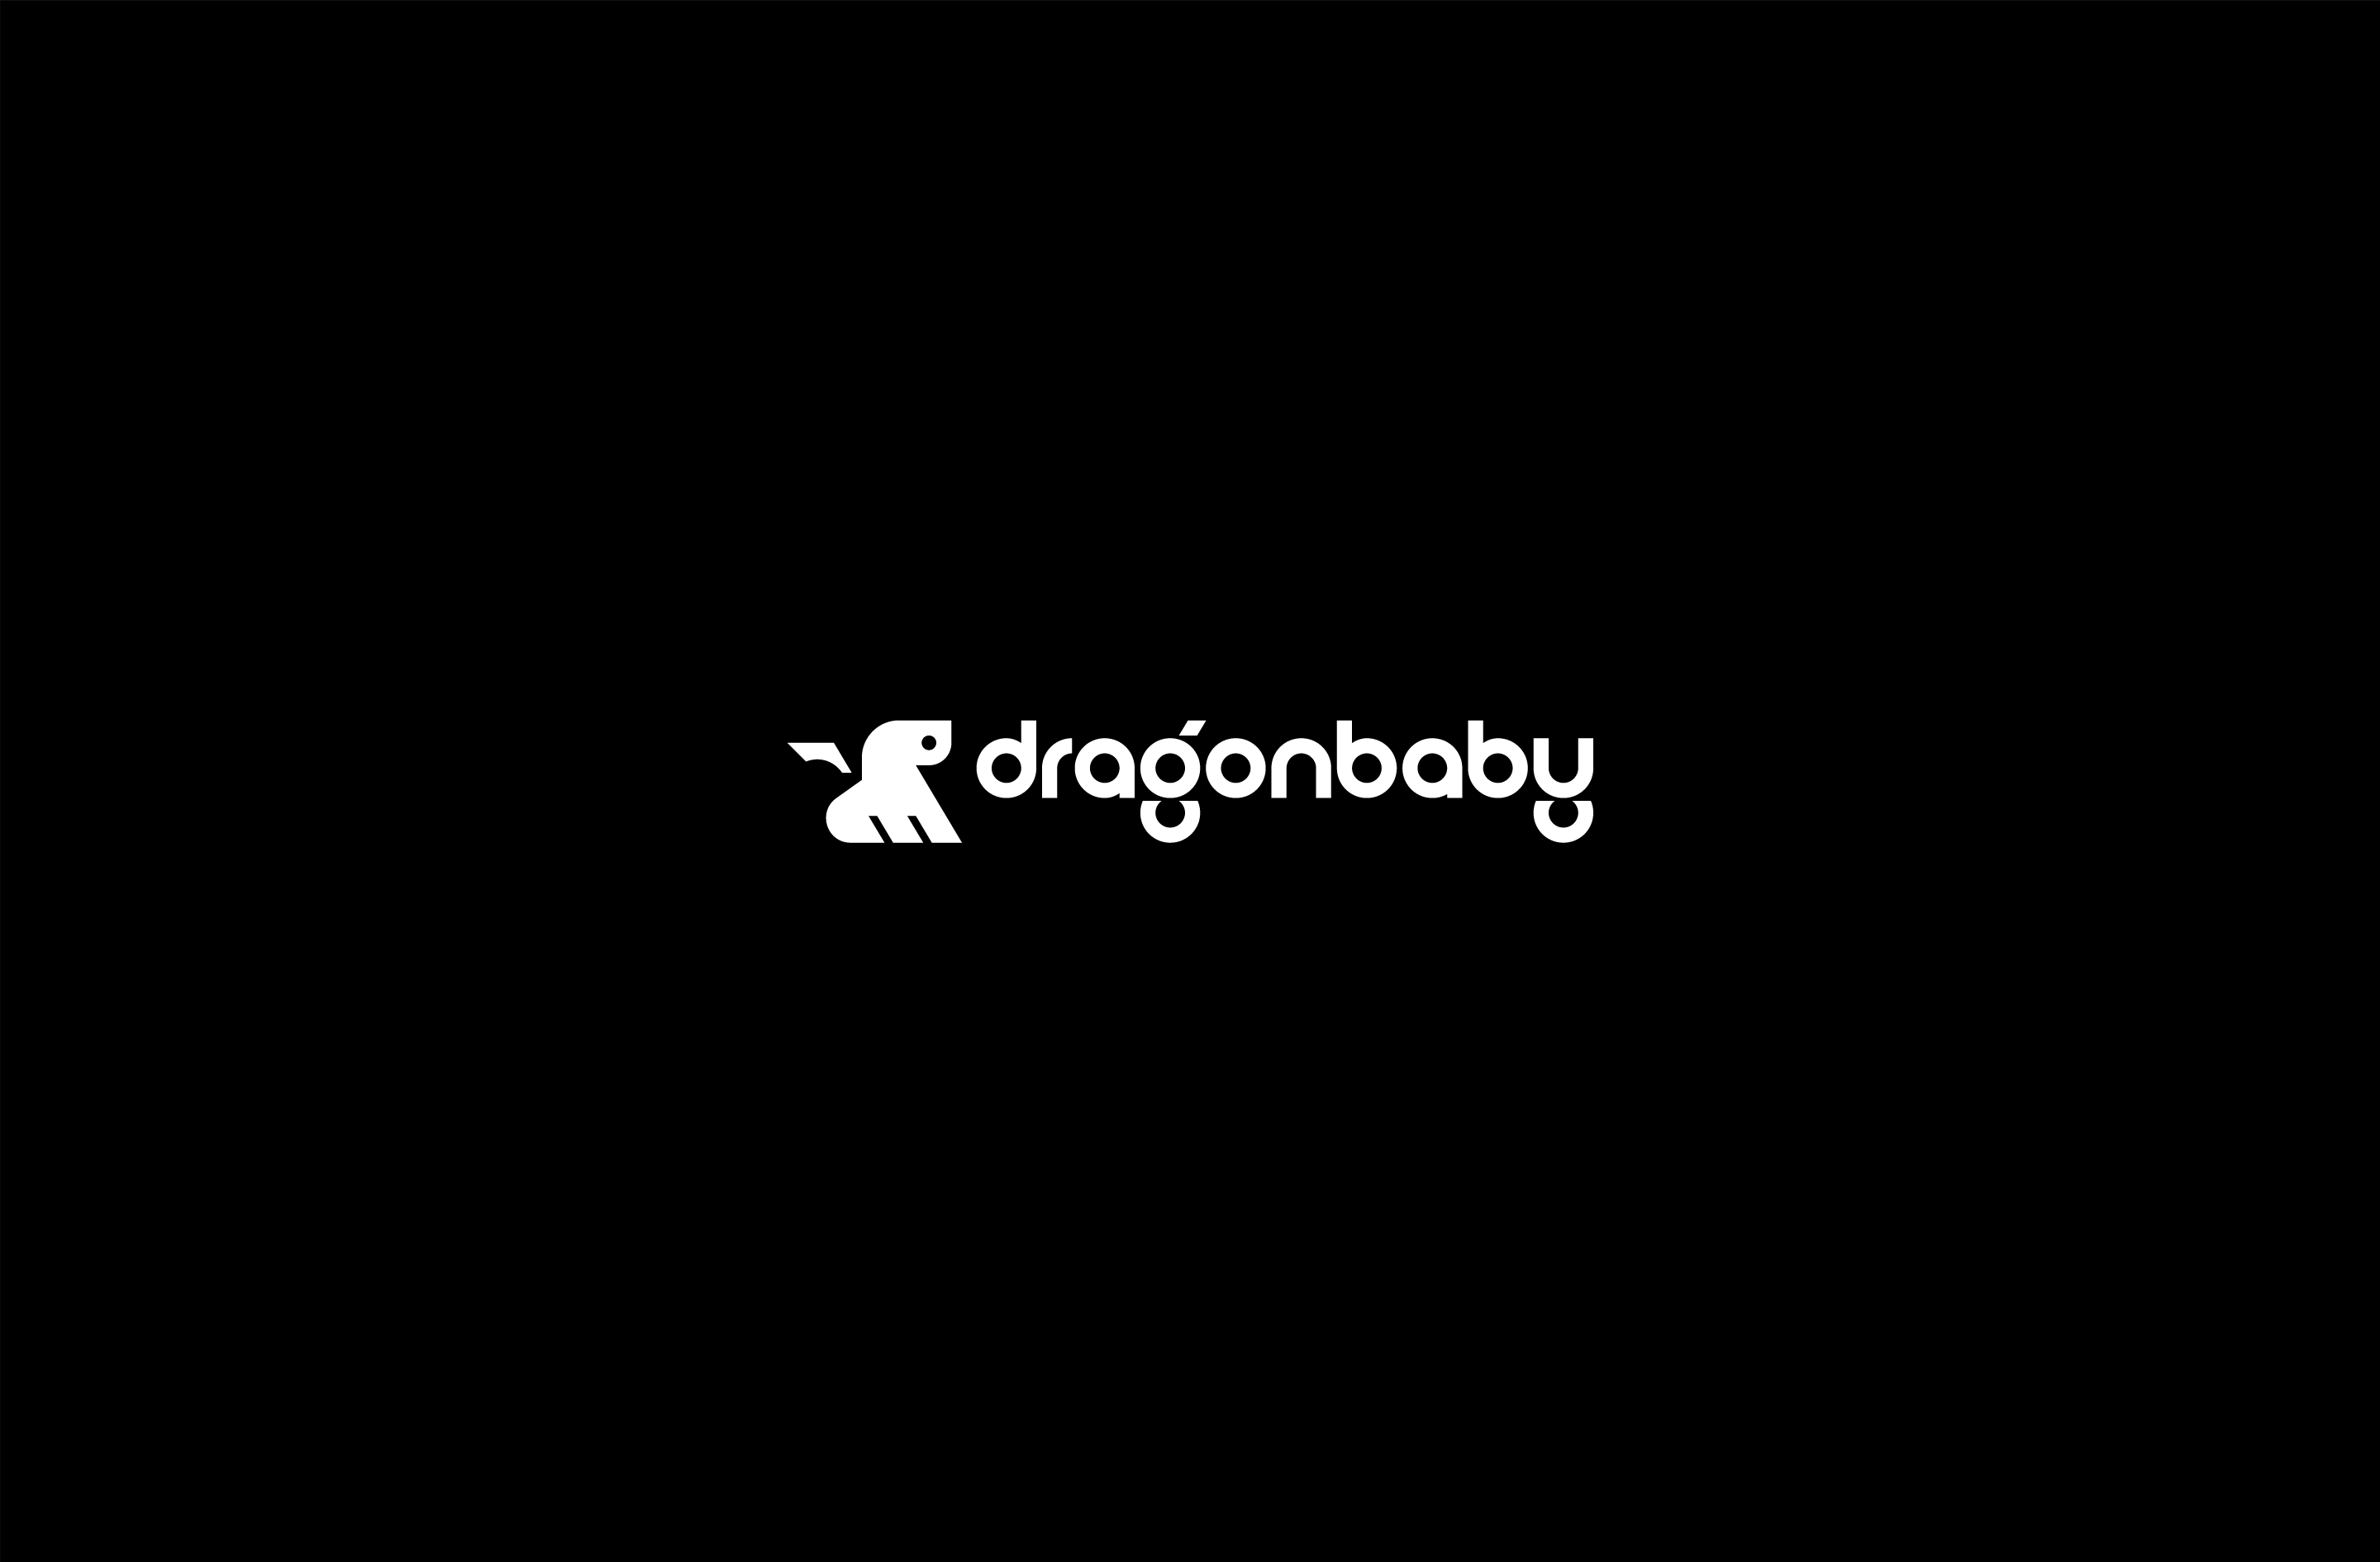 Dragonbaby